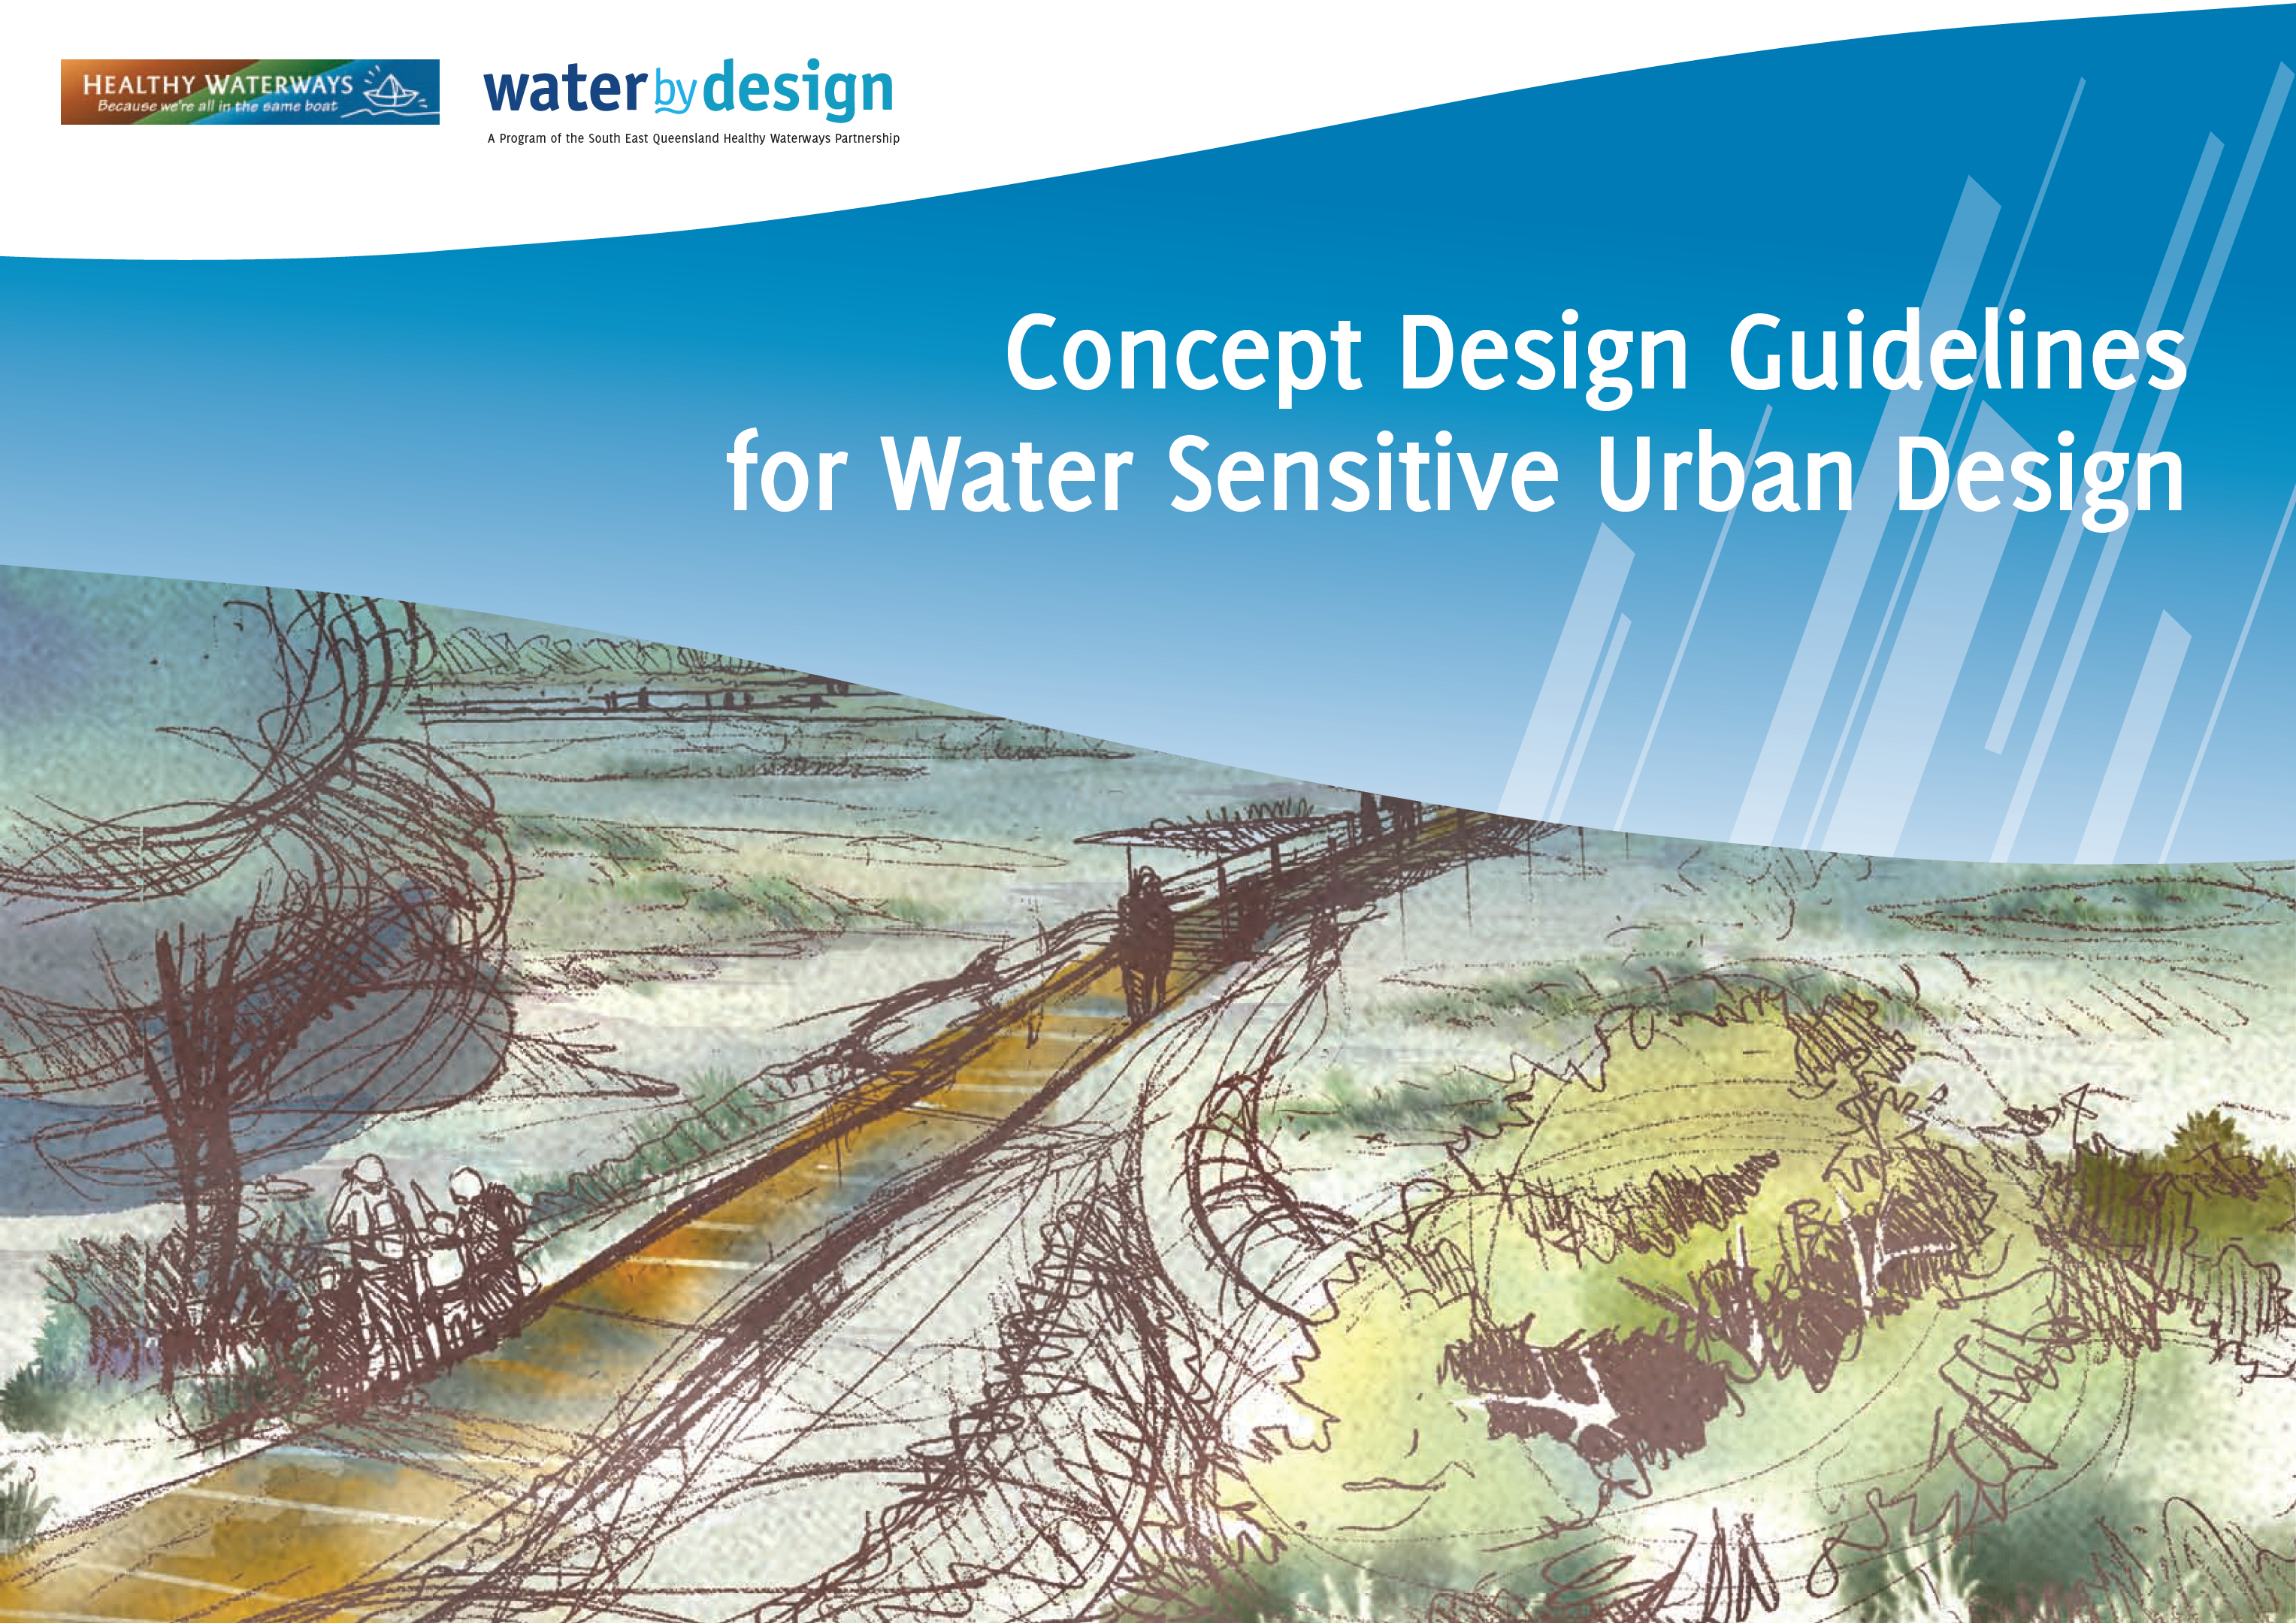 Concept Design Guidelines for Water Sensitive Urban Design (2009)